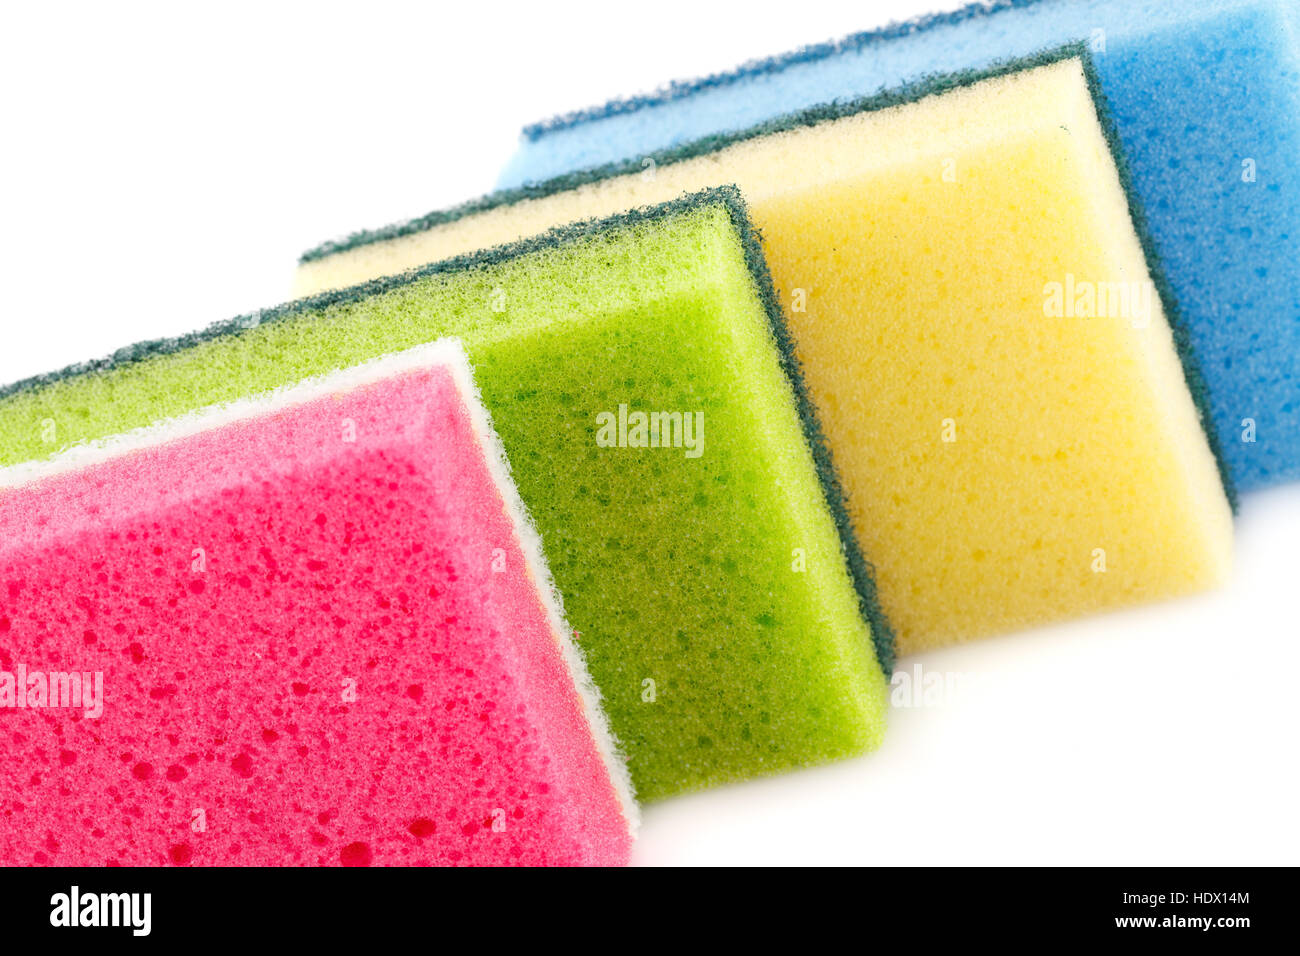 Colorful sponges isolated on white background. Stock Photo